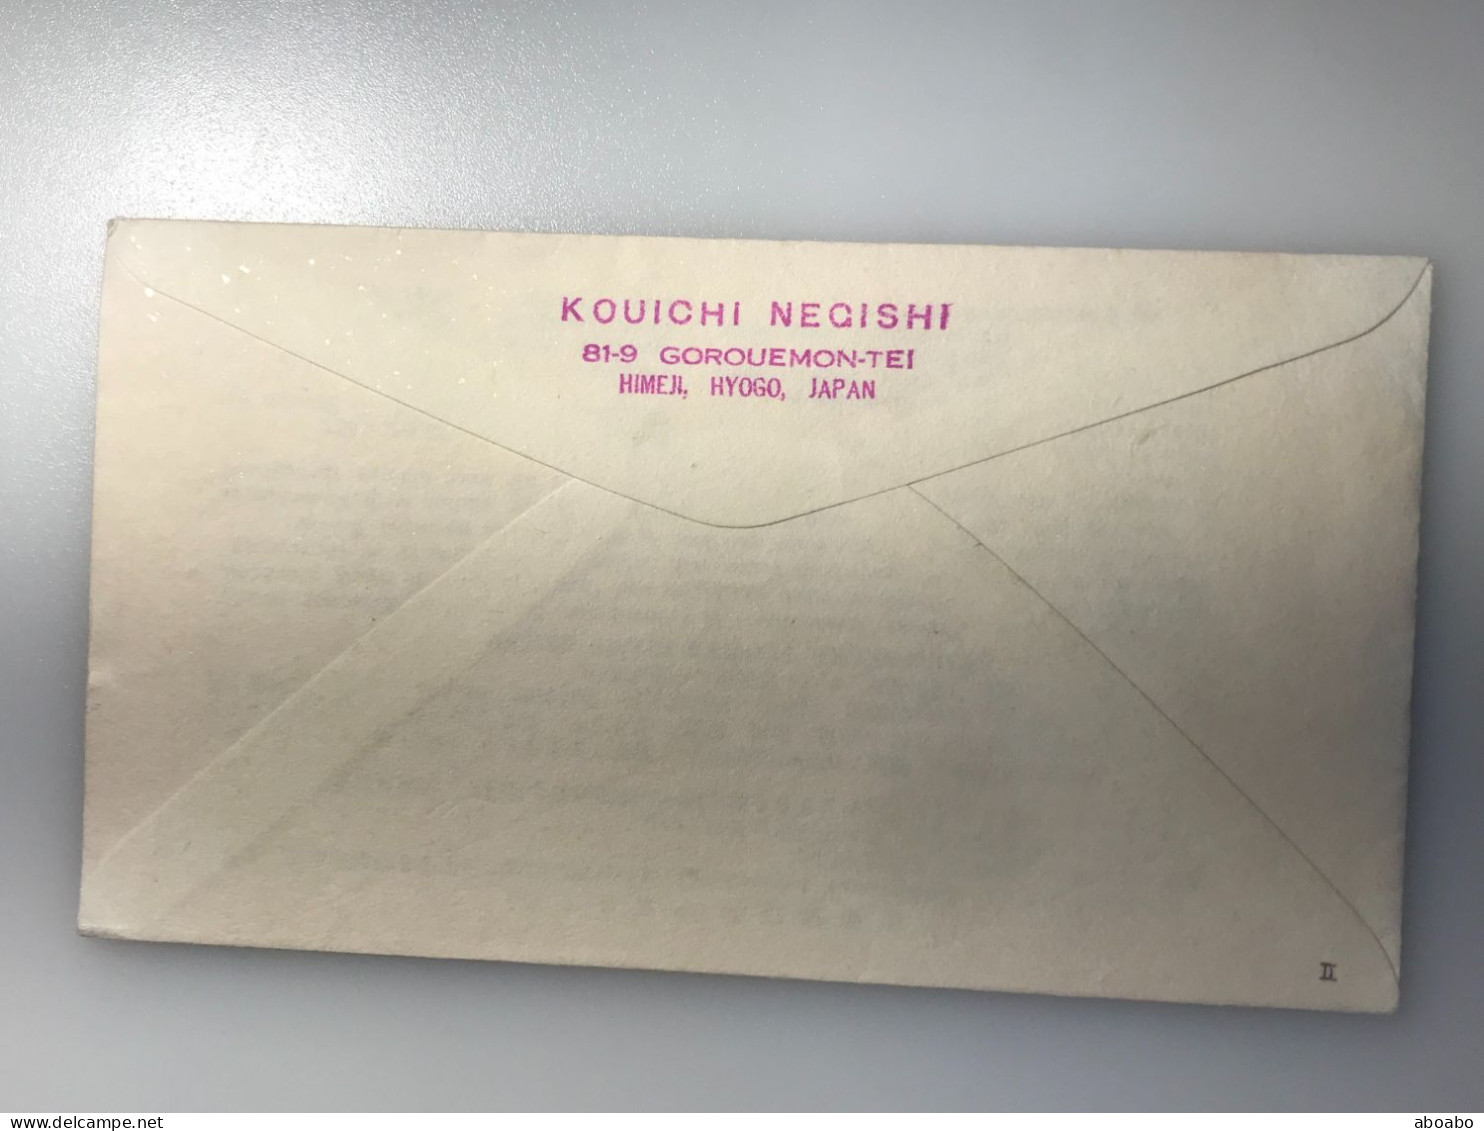 JAPAN UMSCHLAG 1961 NACH GRAZ....30/4 - Briefe U. Dokumente